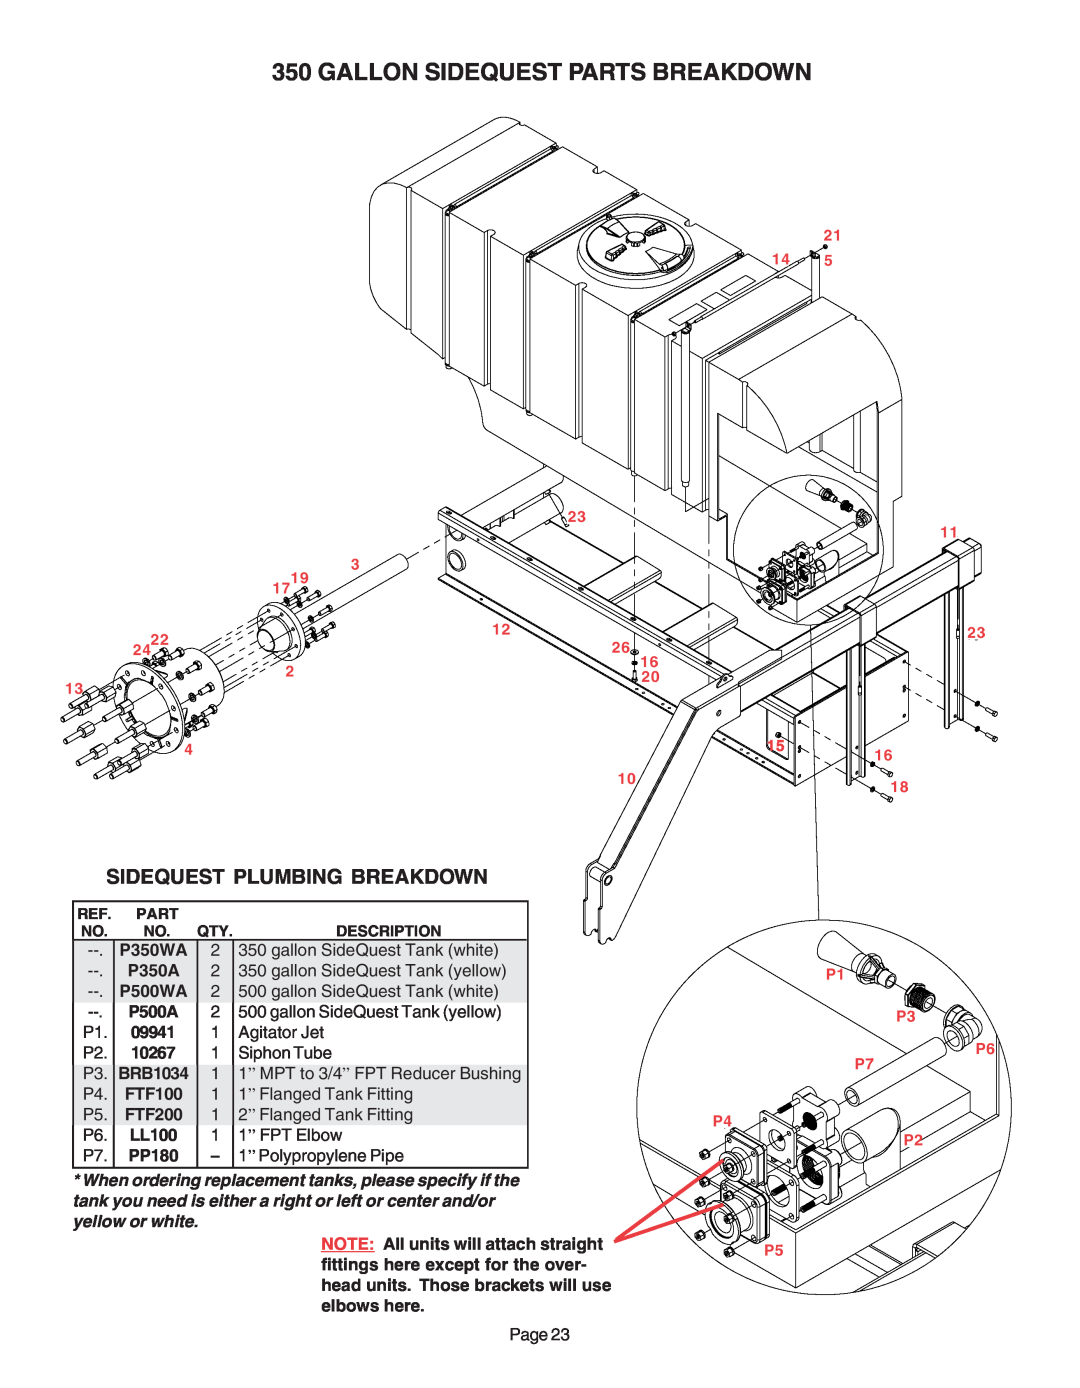 Demco AC20037 manual Gallon Sidequest Parts Breakdown, Sidequest Plumbing Breakdown 